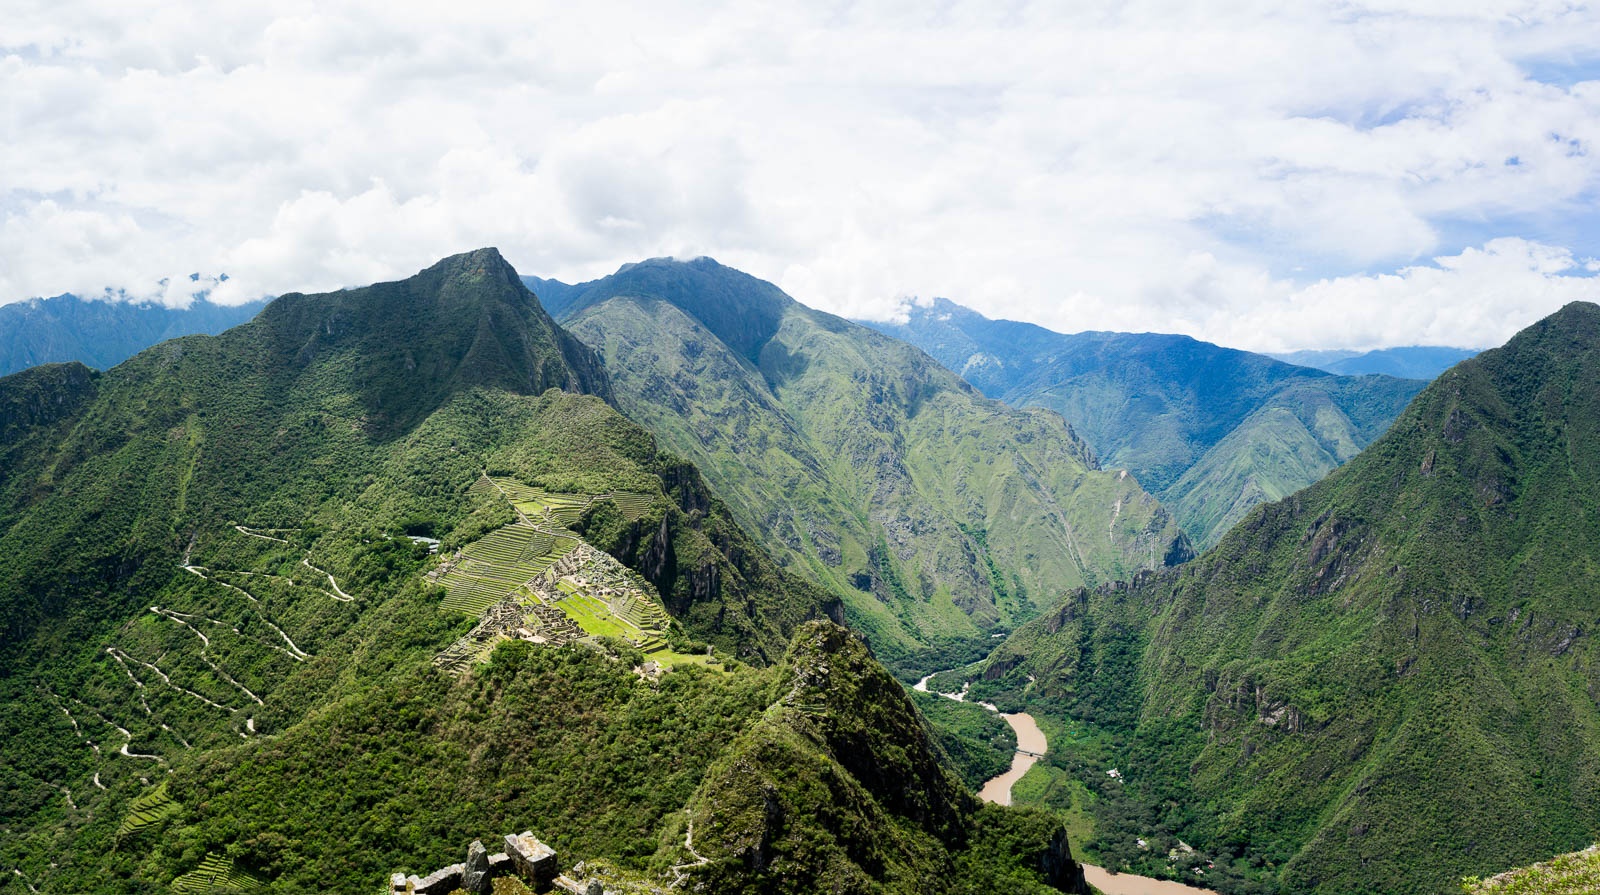 Machu Picchu from the top of Huayna Picchu